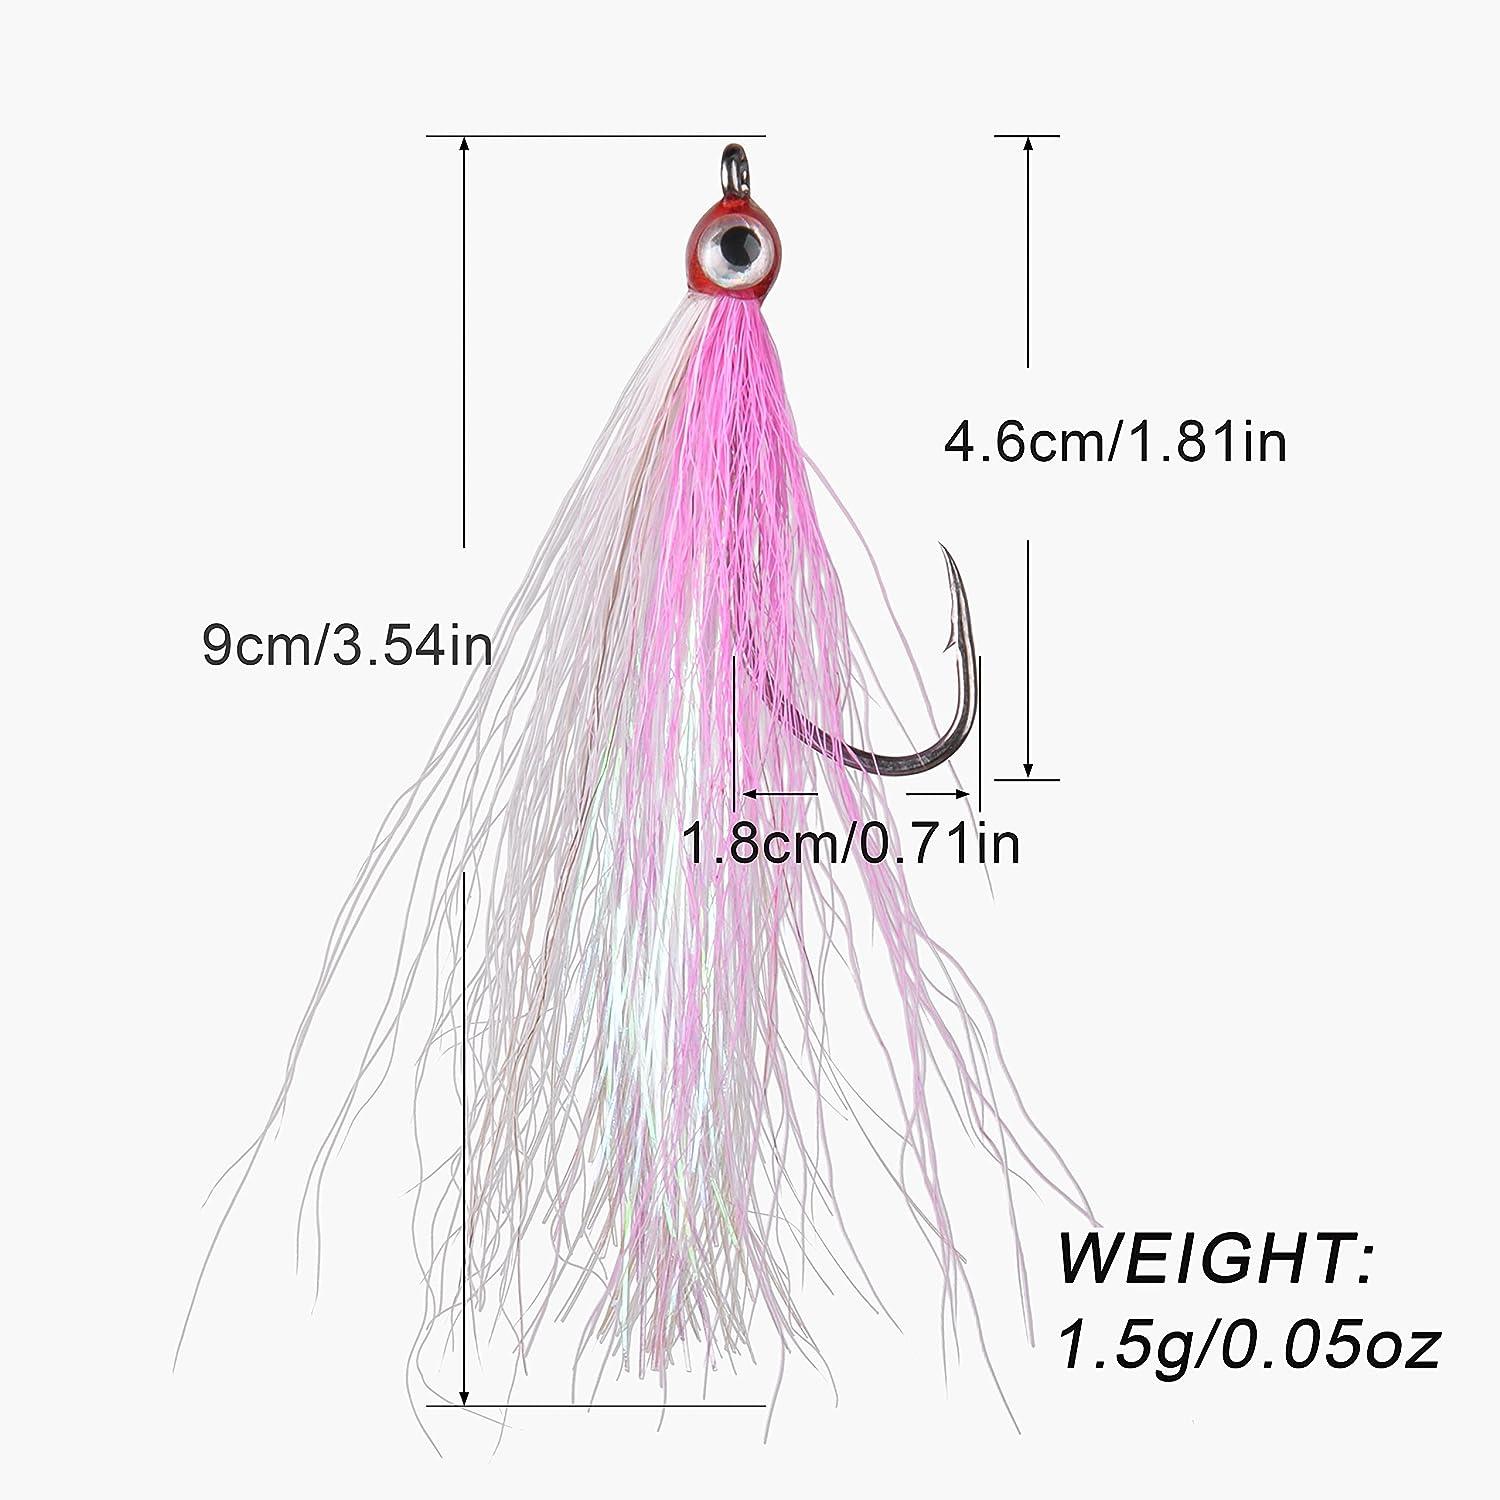 Fishing Bucktail Teaser Hooks,5pcs Saltwater Fishing Teaser Lures with  Bucktail Crystal Flash Skirt Big Eyes Fluke Flounder Rig Fishing Jig Hooks  5